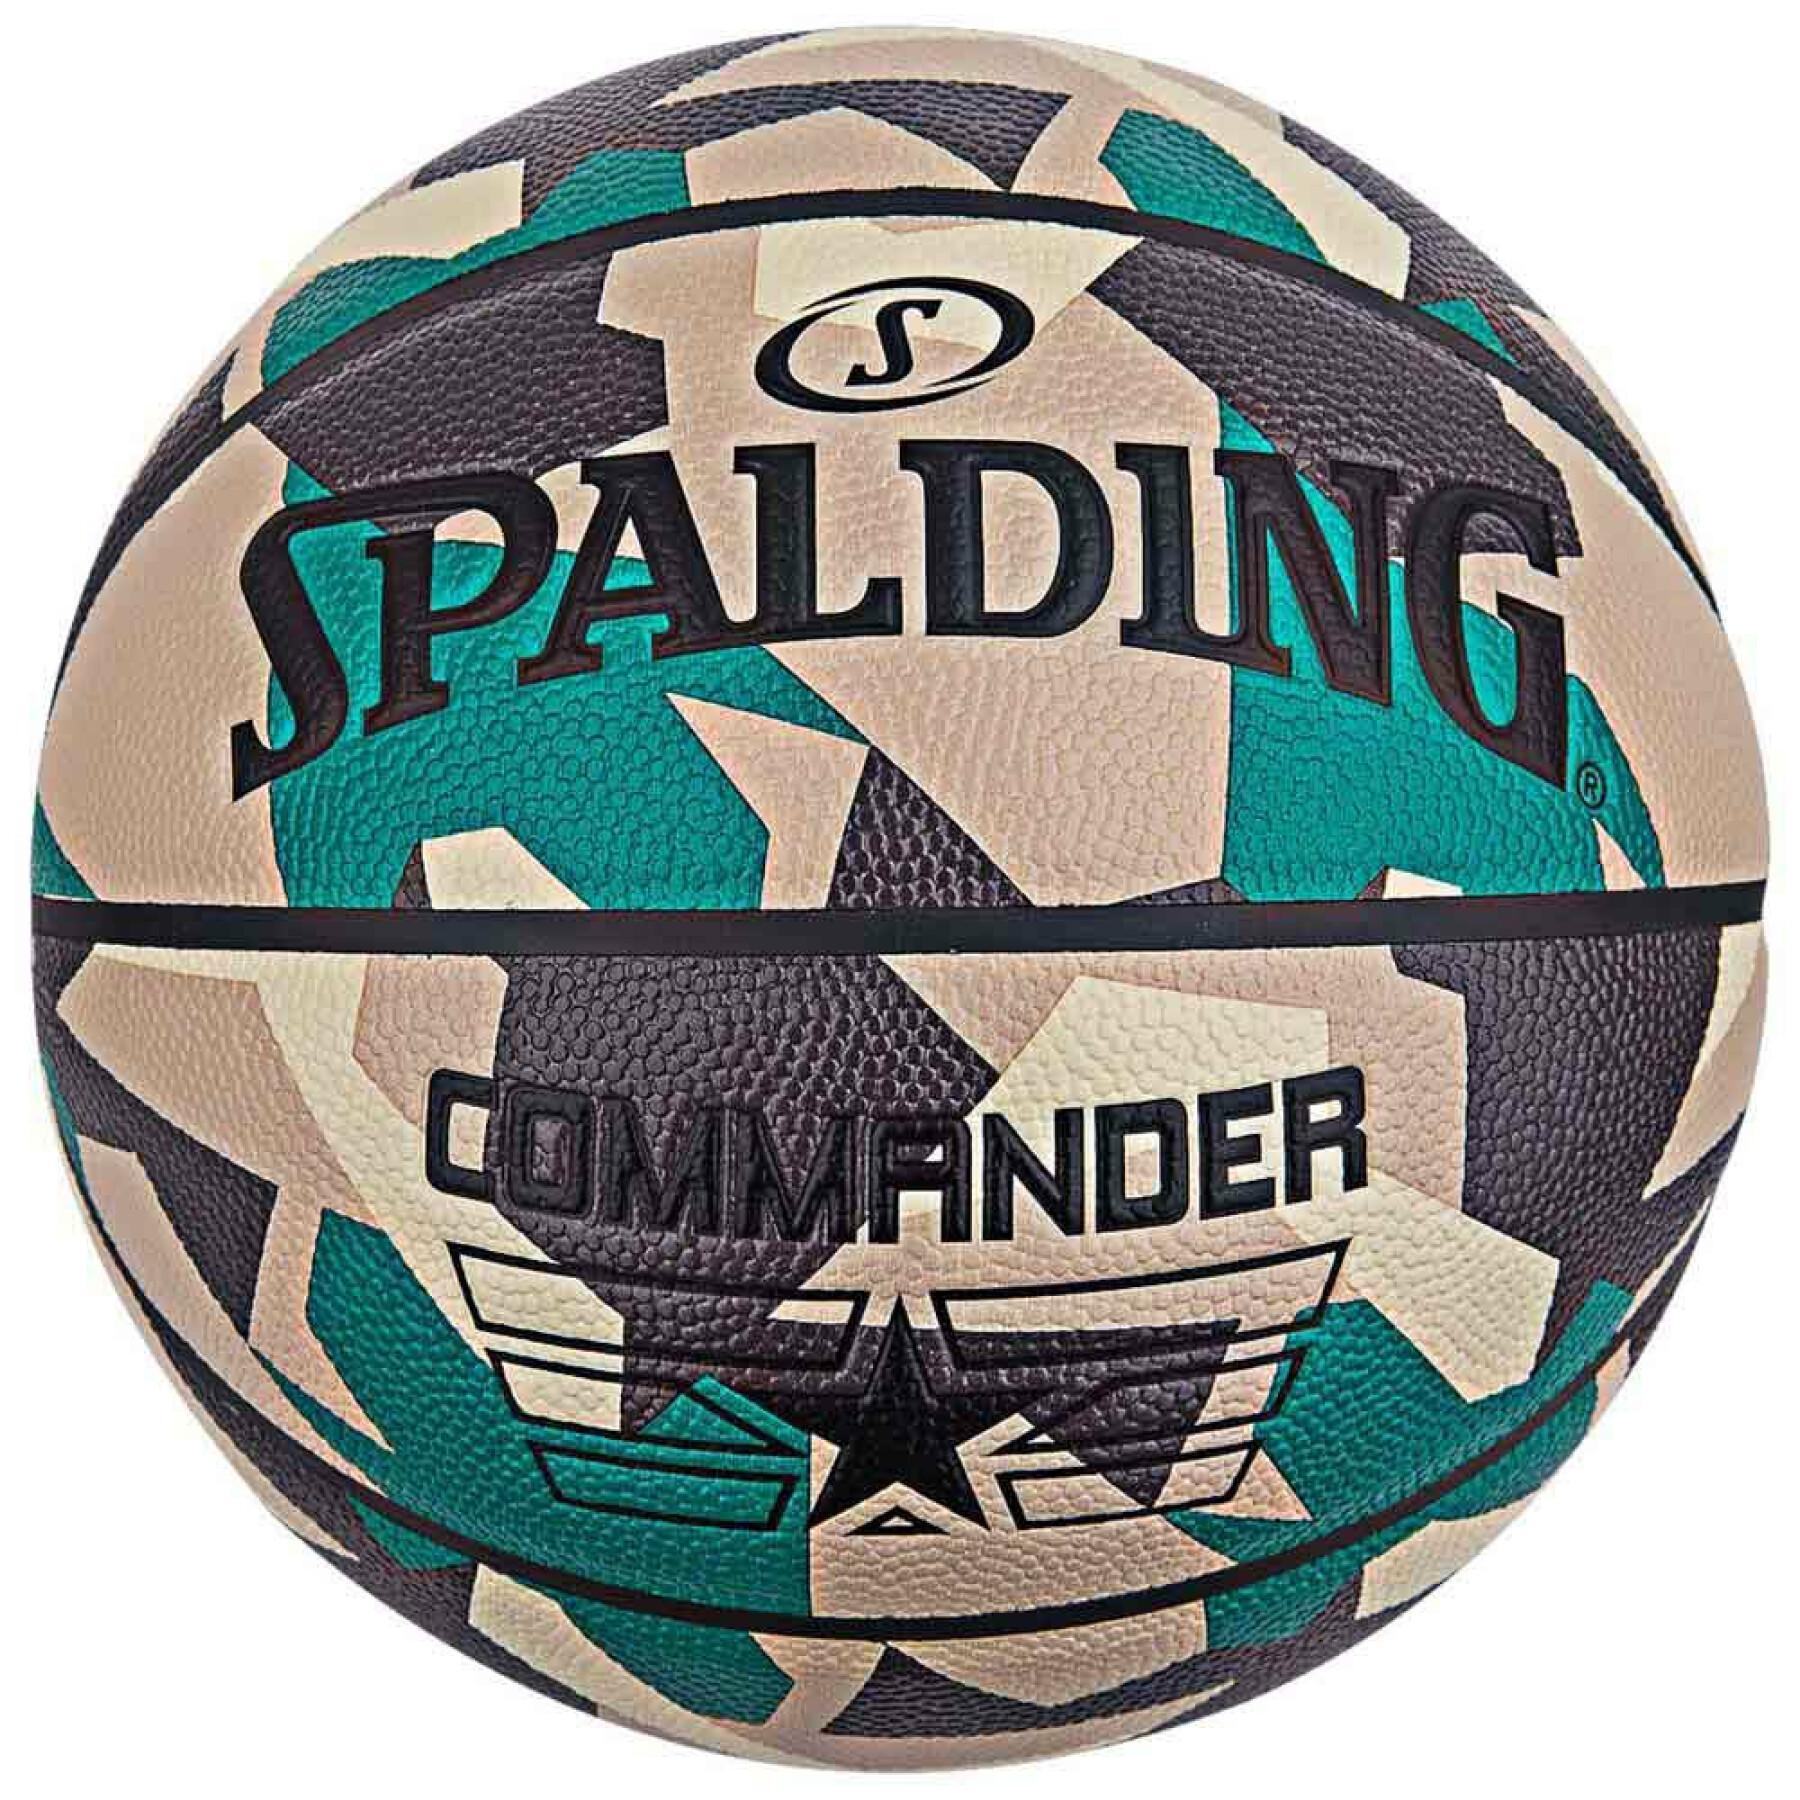 Pallone da basket Spalding Commander